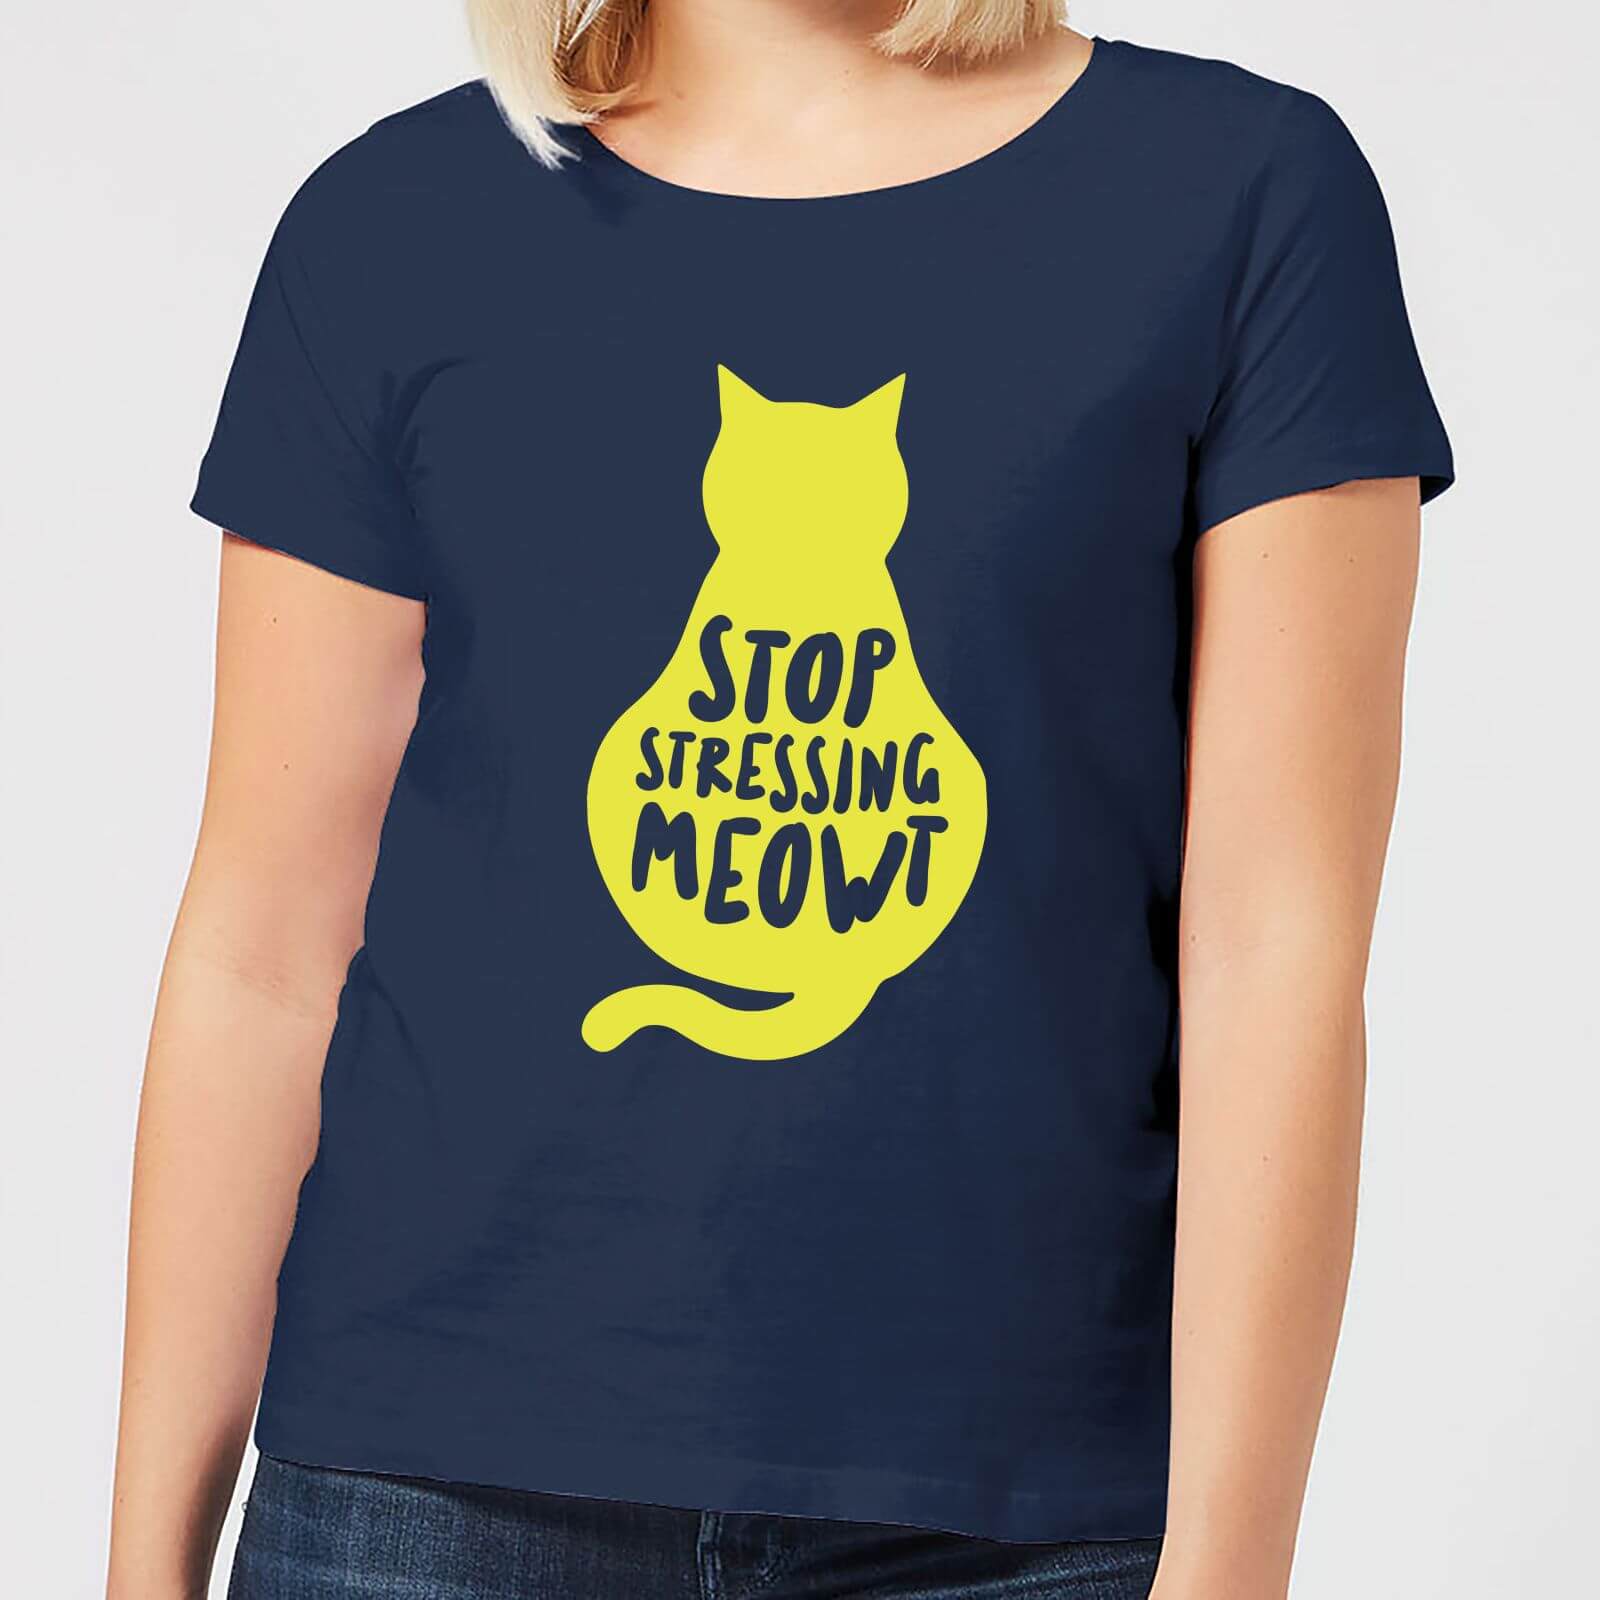 Stop Stressing Meowt Women's T-Shirt - Navy - S